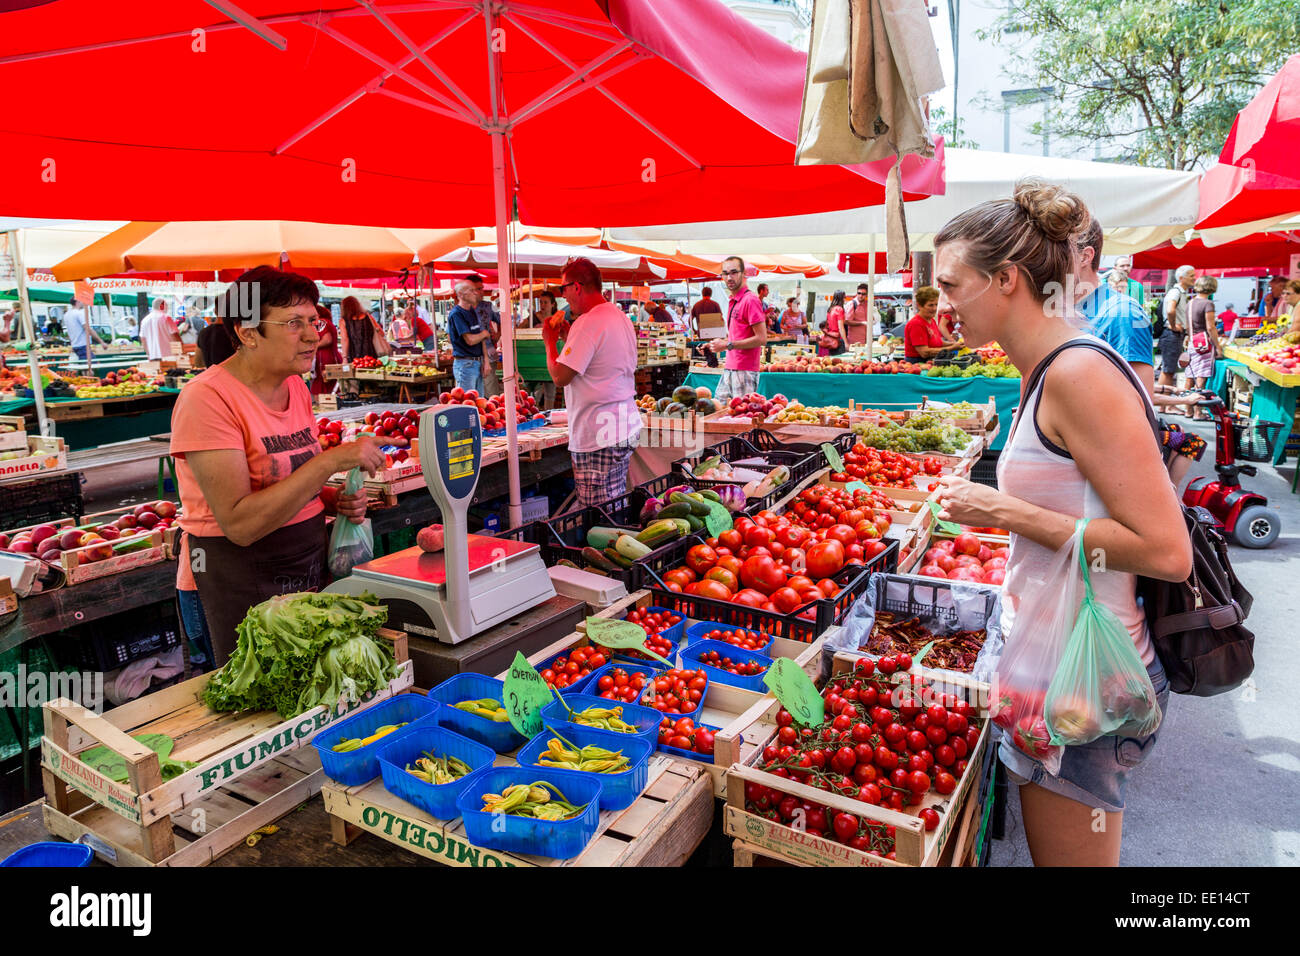 Vegetables on sale in open air market, Ljubljana, Slovenia Stock Photo